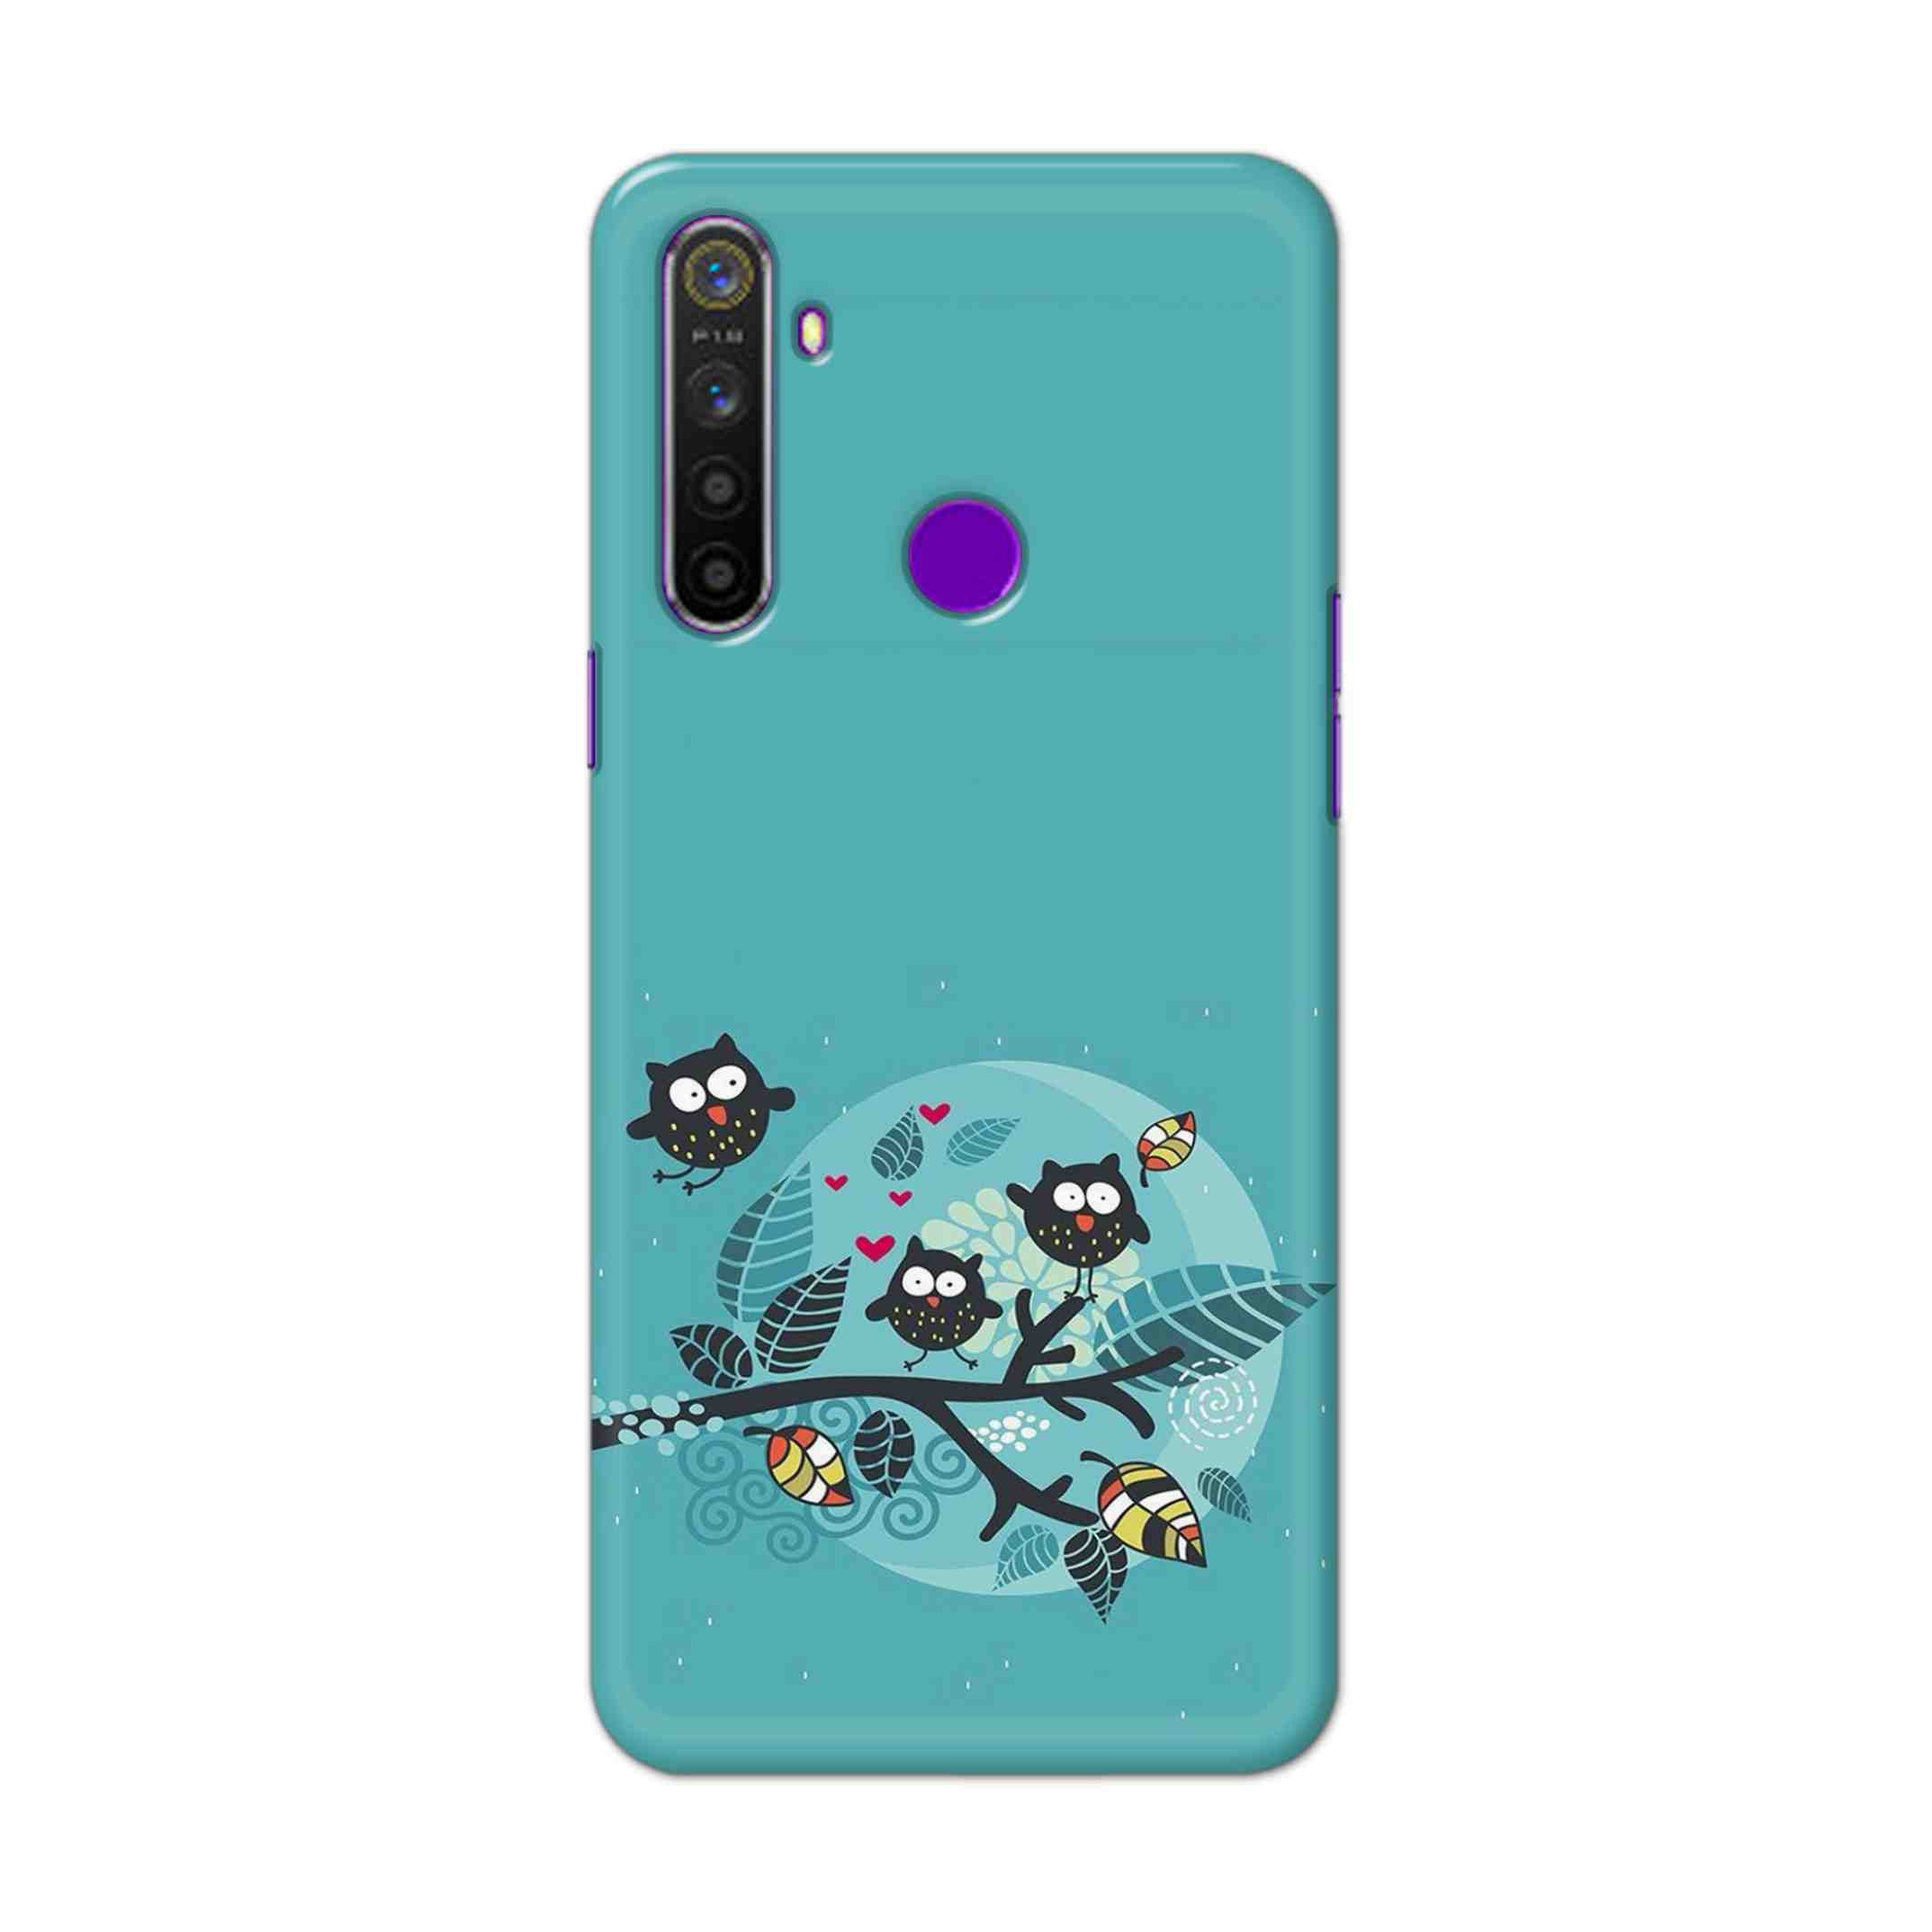 Buy Owl Hard Back Mobile Phone Case Cover For Realme 5 Pro Online